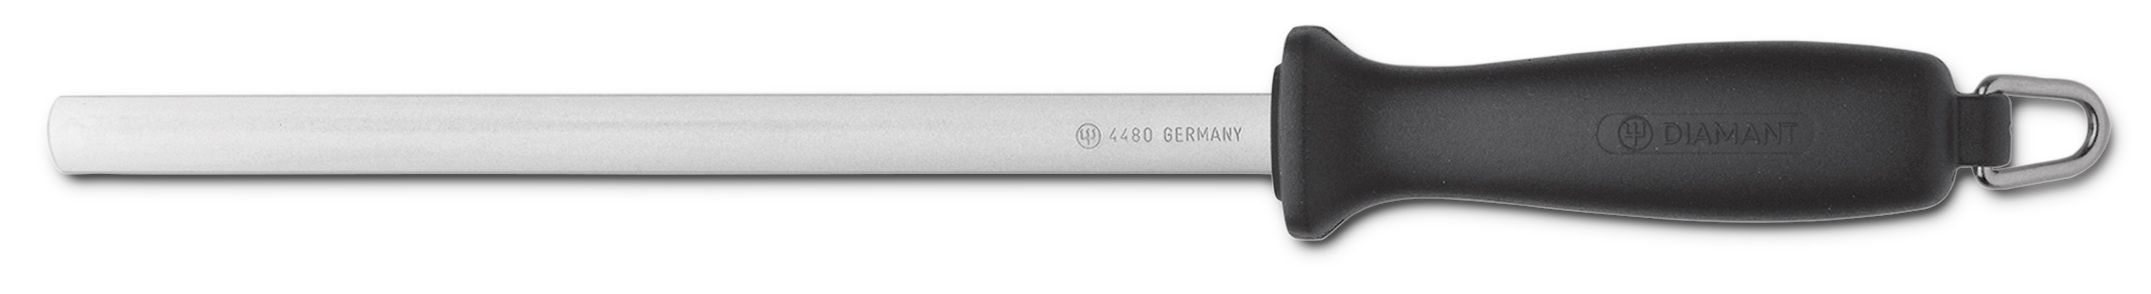 Comprar Chaira de diamante oval Wüsthof 23 cm - Ganivetería Roca